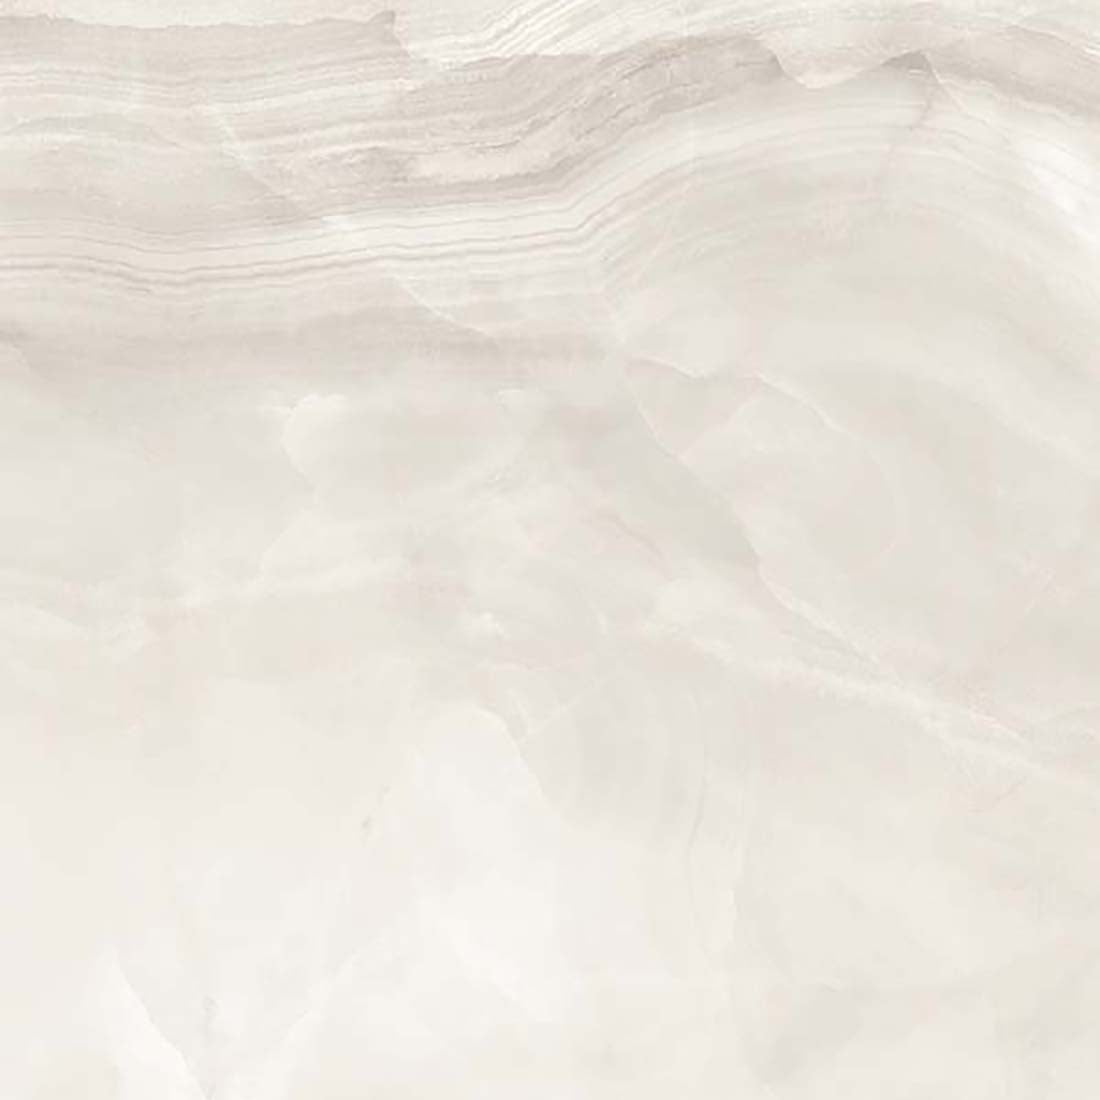 Pallet Deal: 160 Tiles (57 sq.m) Glacier Onyx Grey Polished Porcelain 60x60cm Wall & Floor Tile